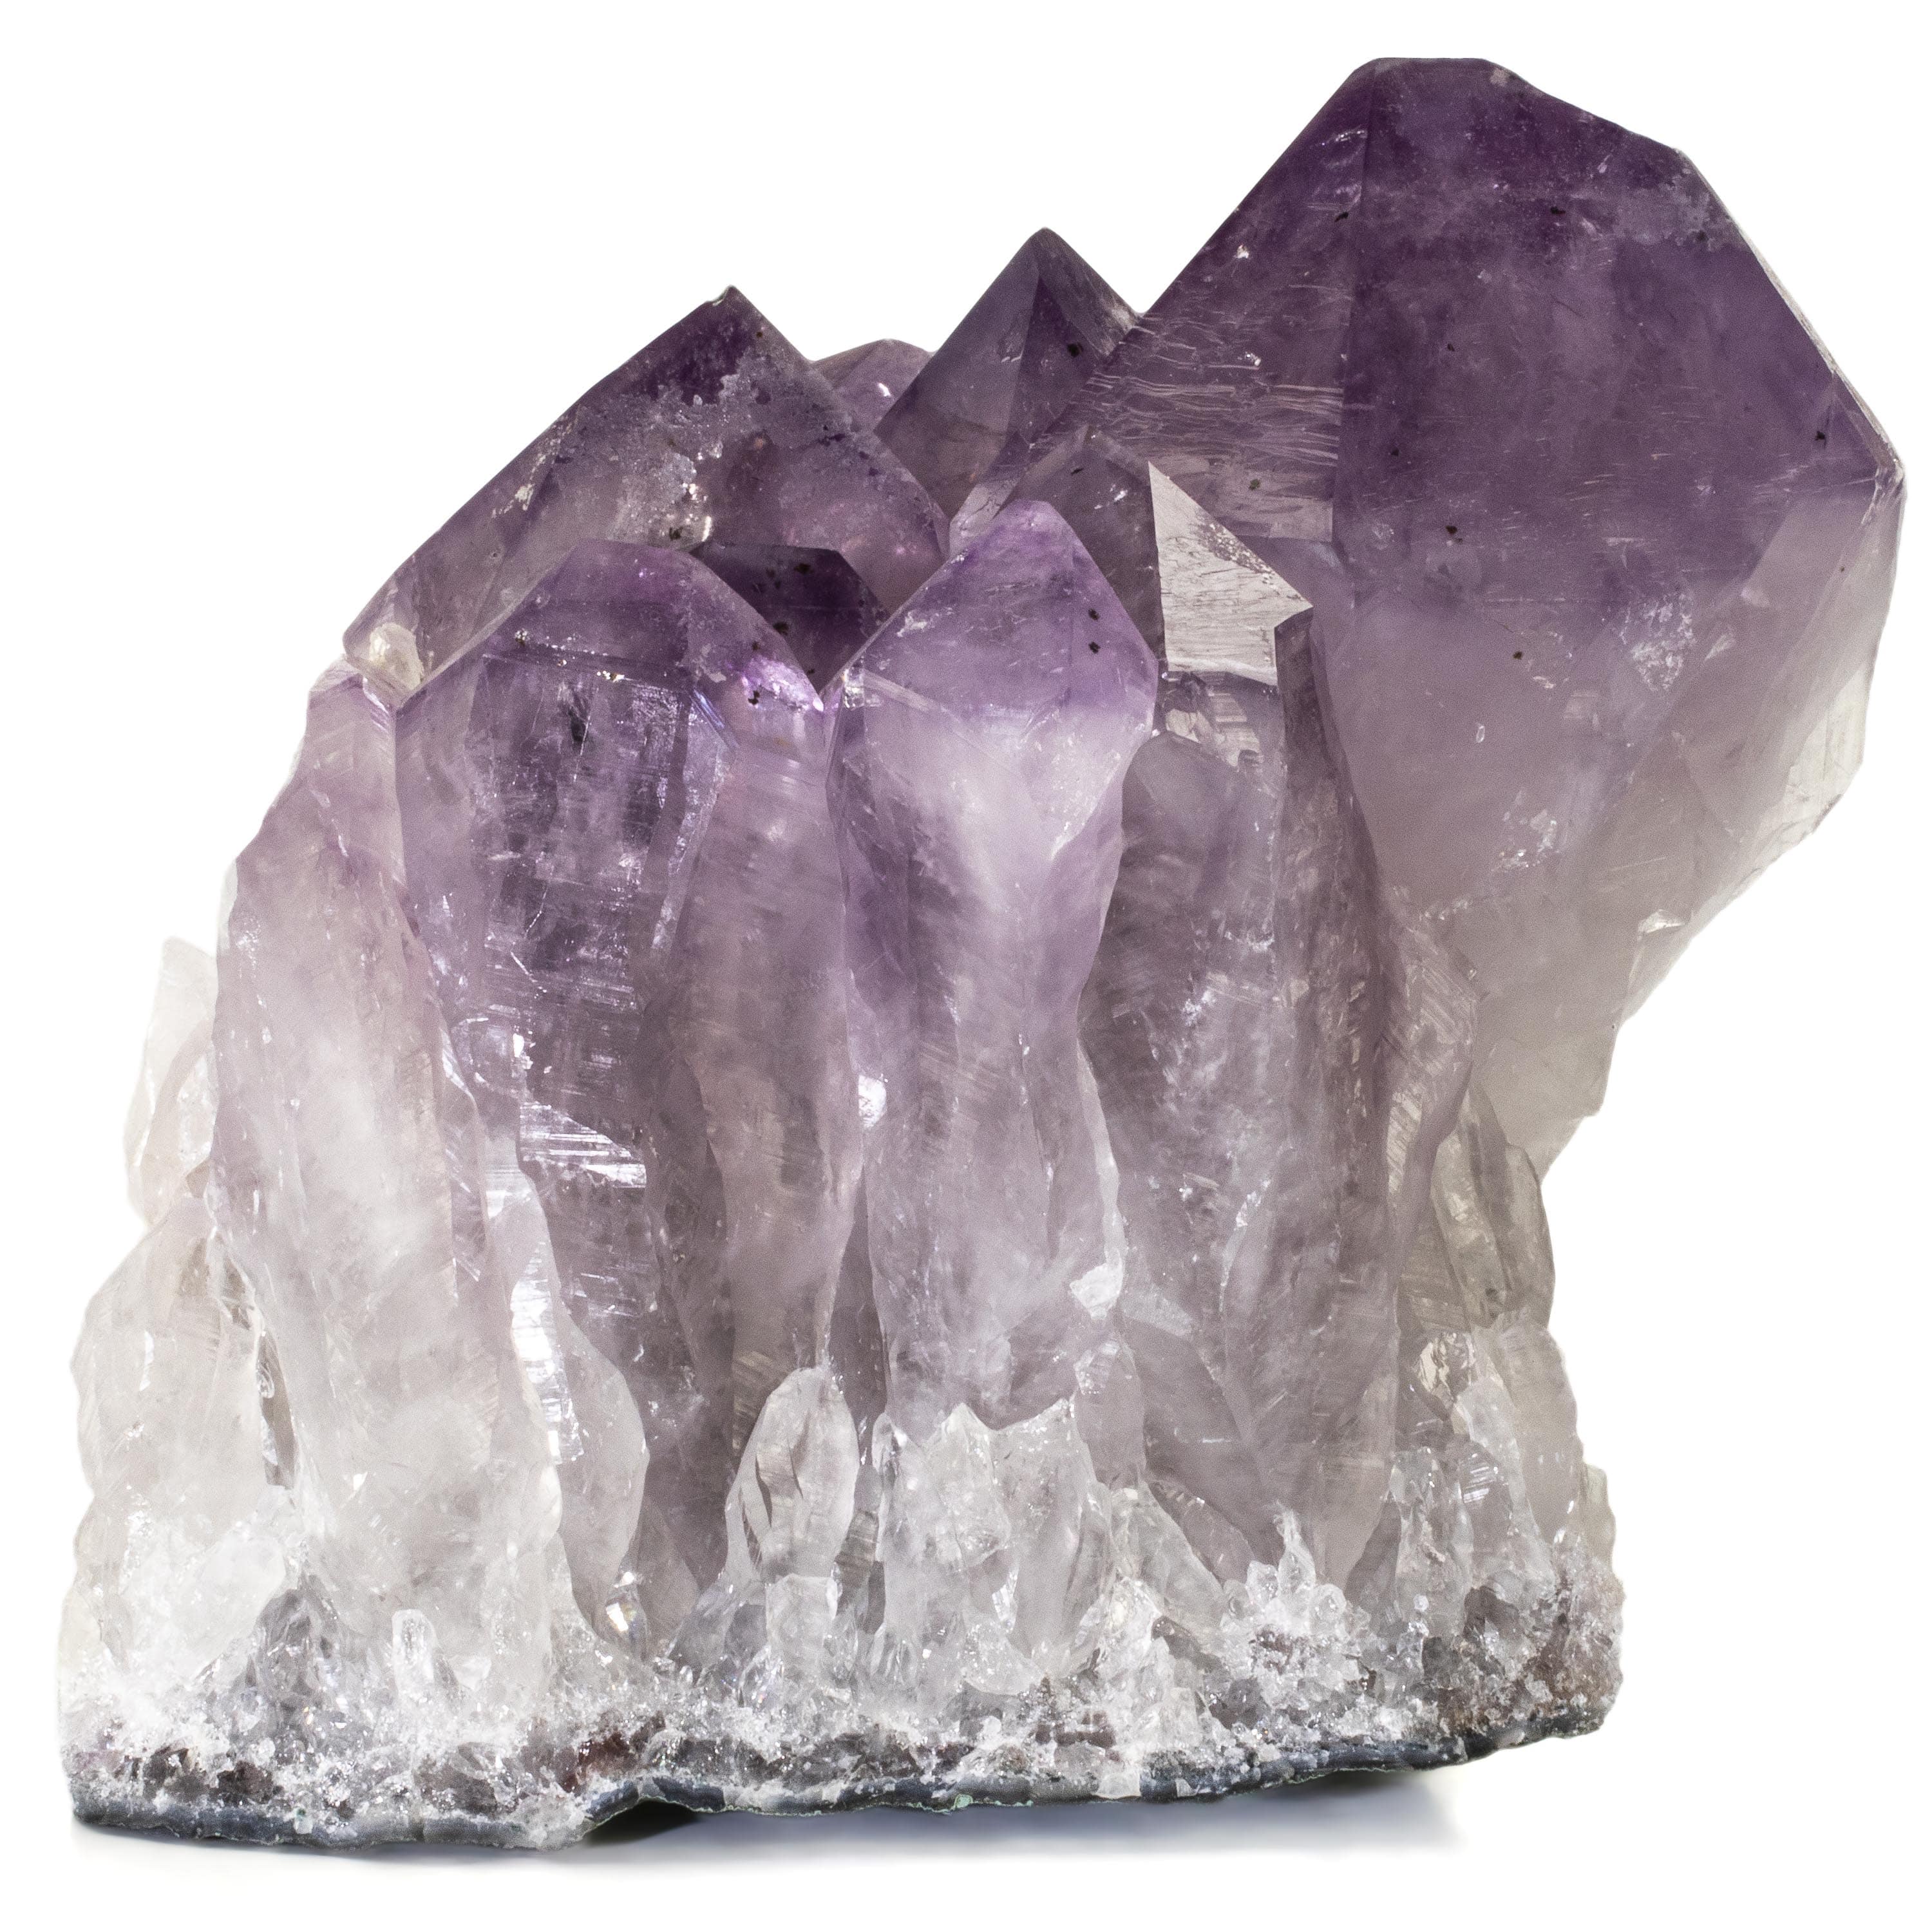 Kalifano Amethyst Amethyst Geode - 7 in. / 7.3 lbs BAG1600.017